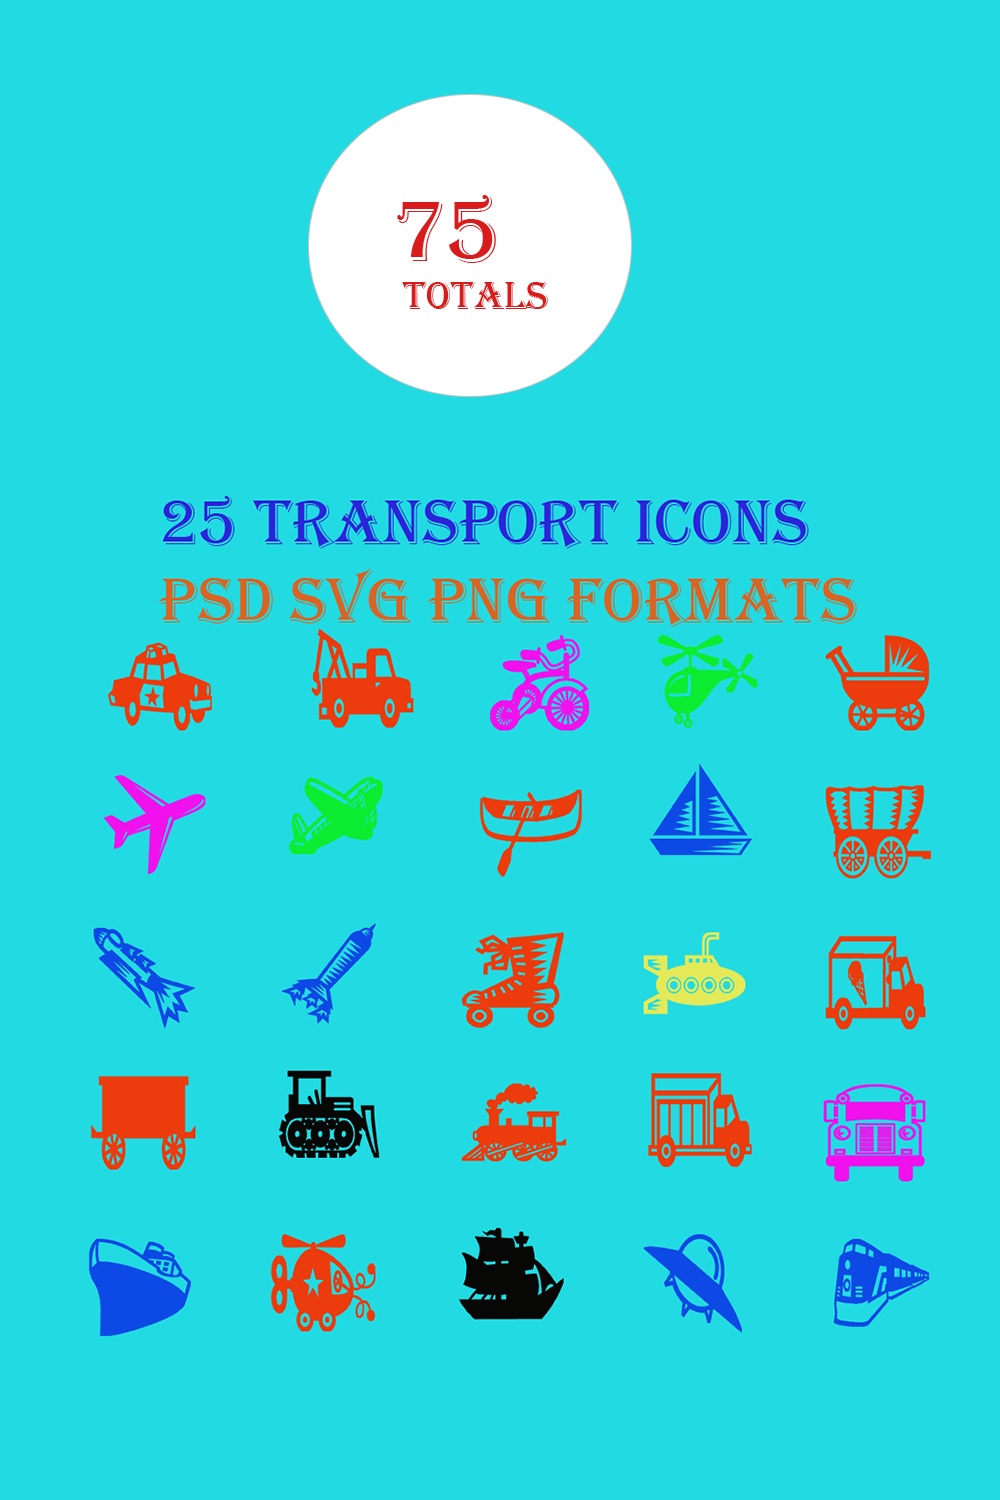 25 Transports And Vehicles Icons Set Pinterest Image.